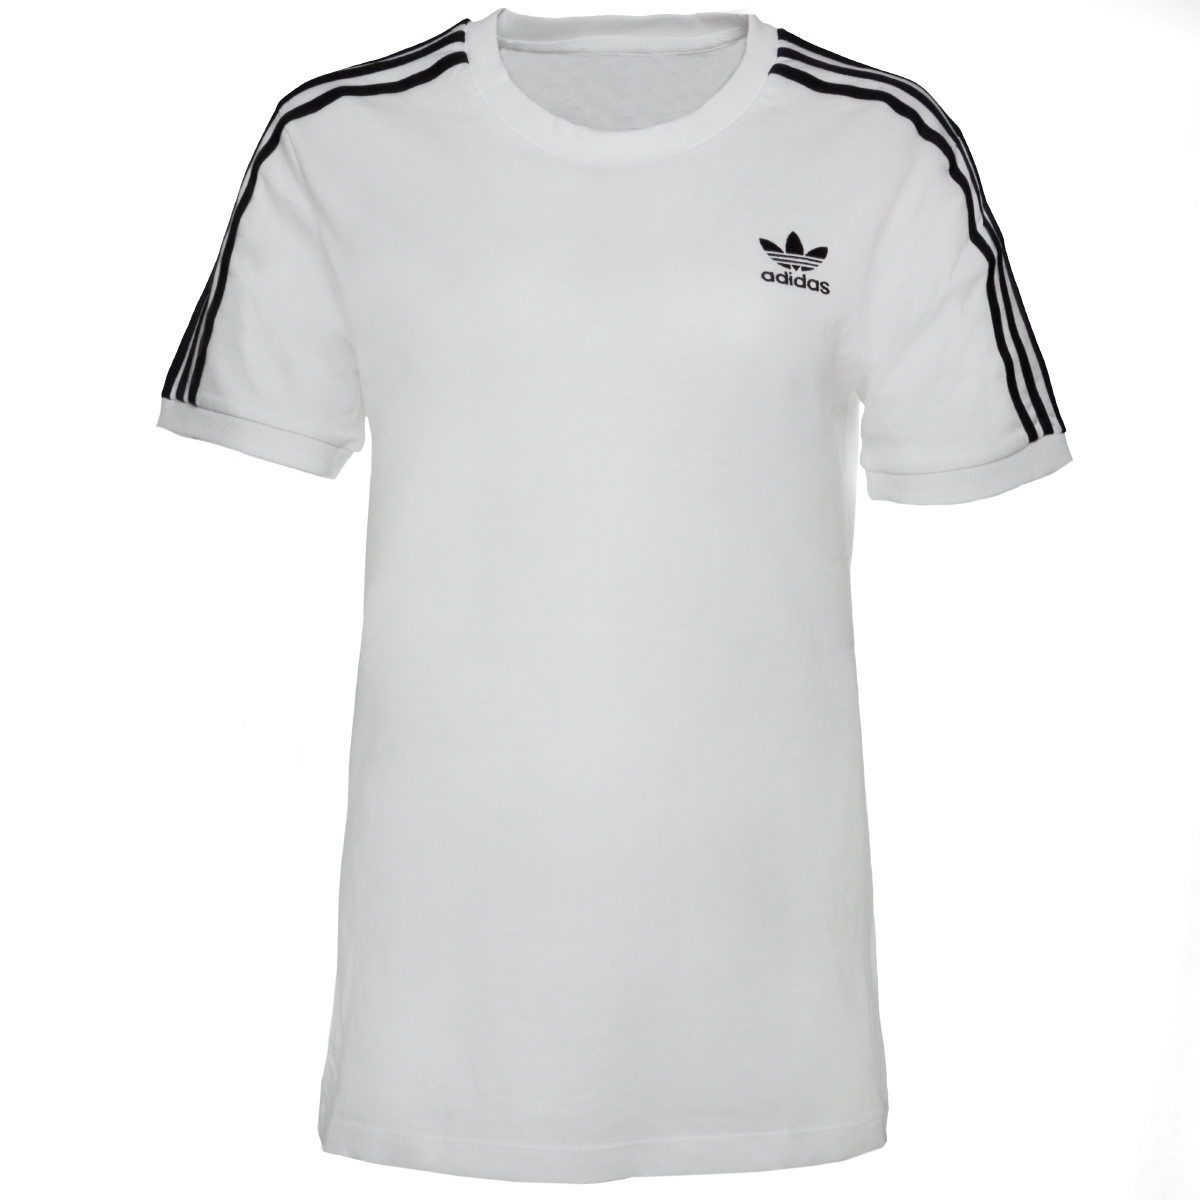 Adidas 3 Stripes Tee T-Shirt